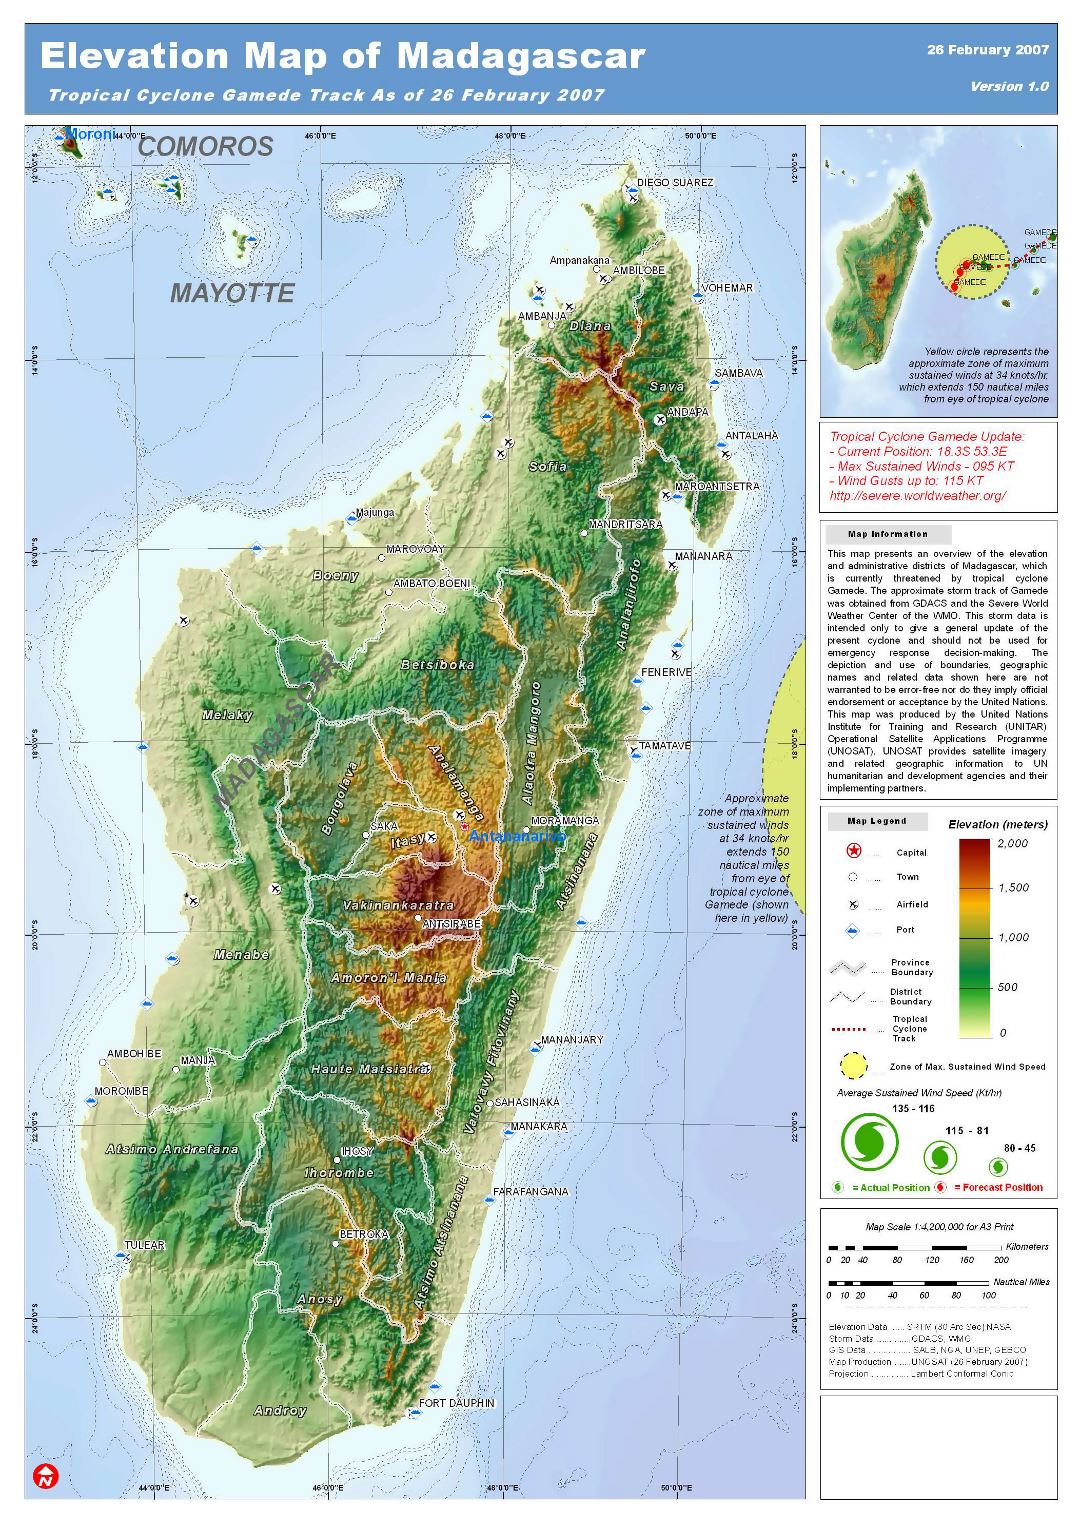 Большая детальная карта высот Мадагаскара